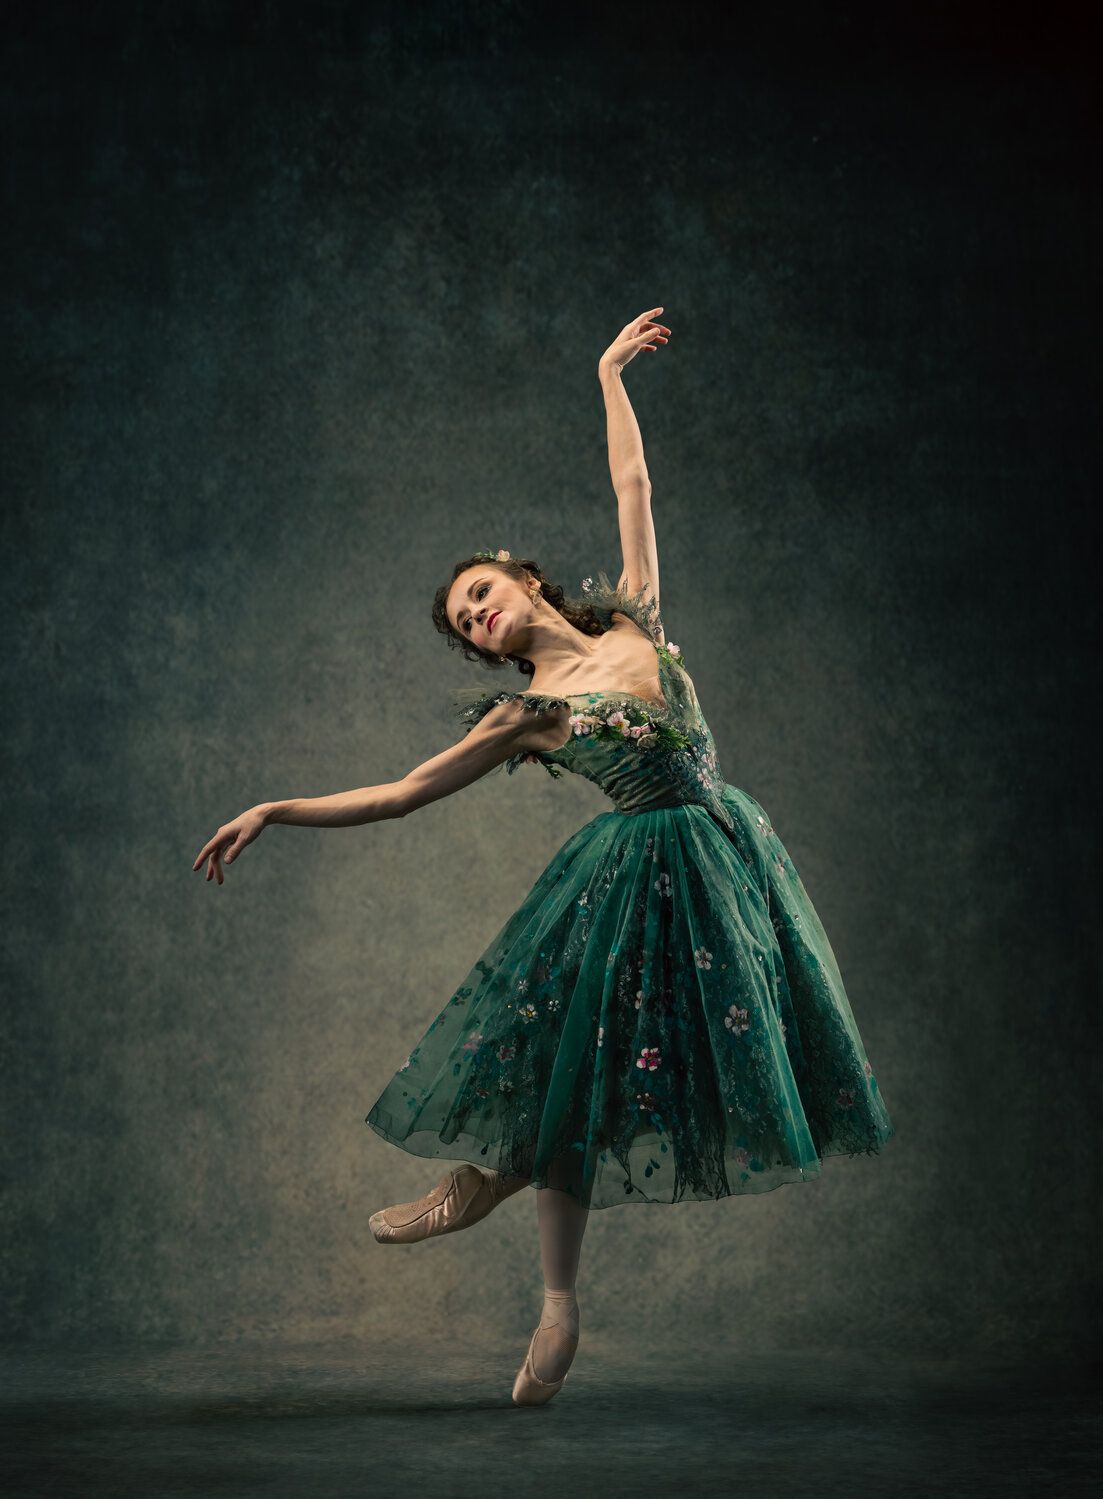 Philadelphia Ballet: The Dream & George Balanchine's Prodigal Son